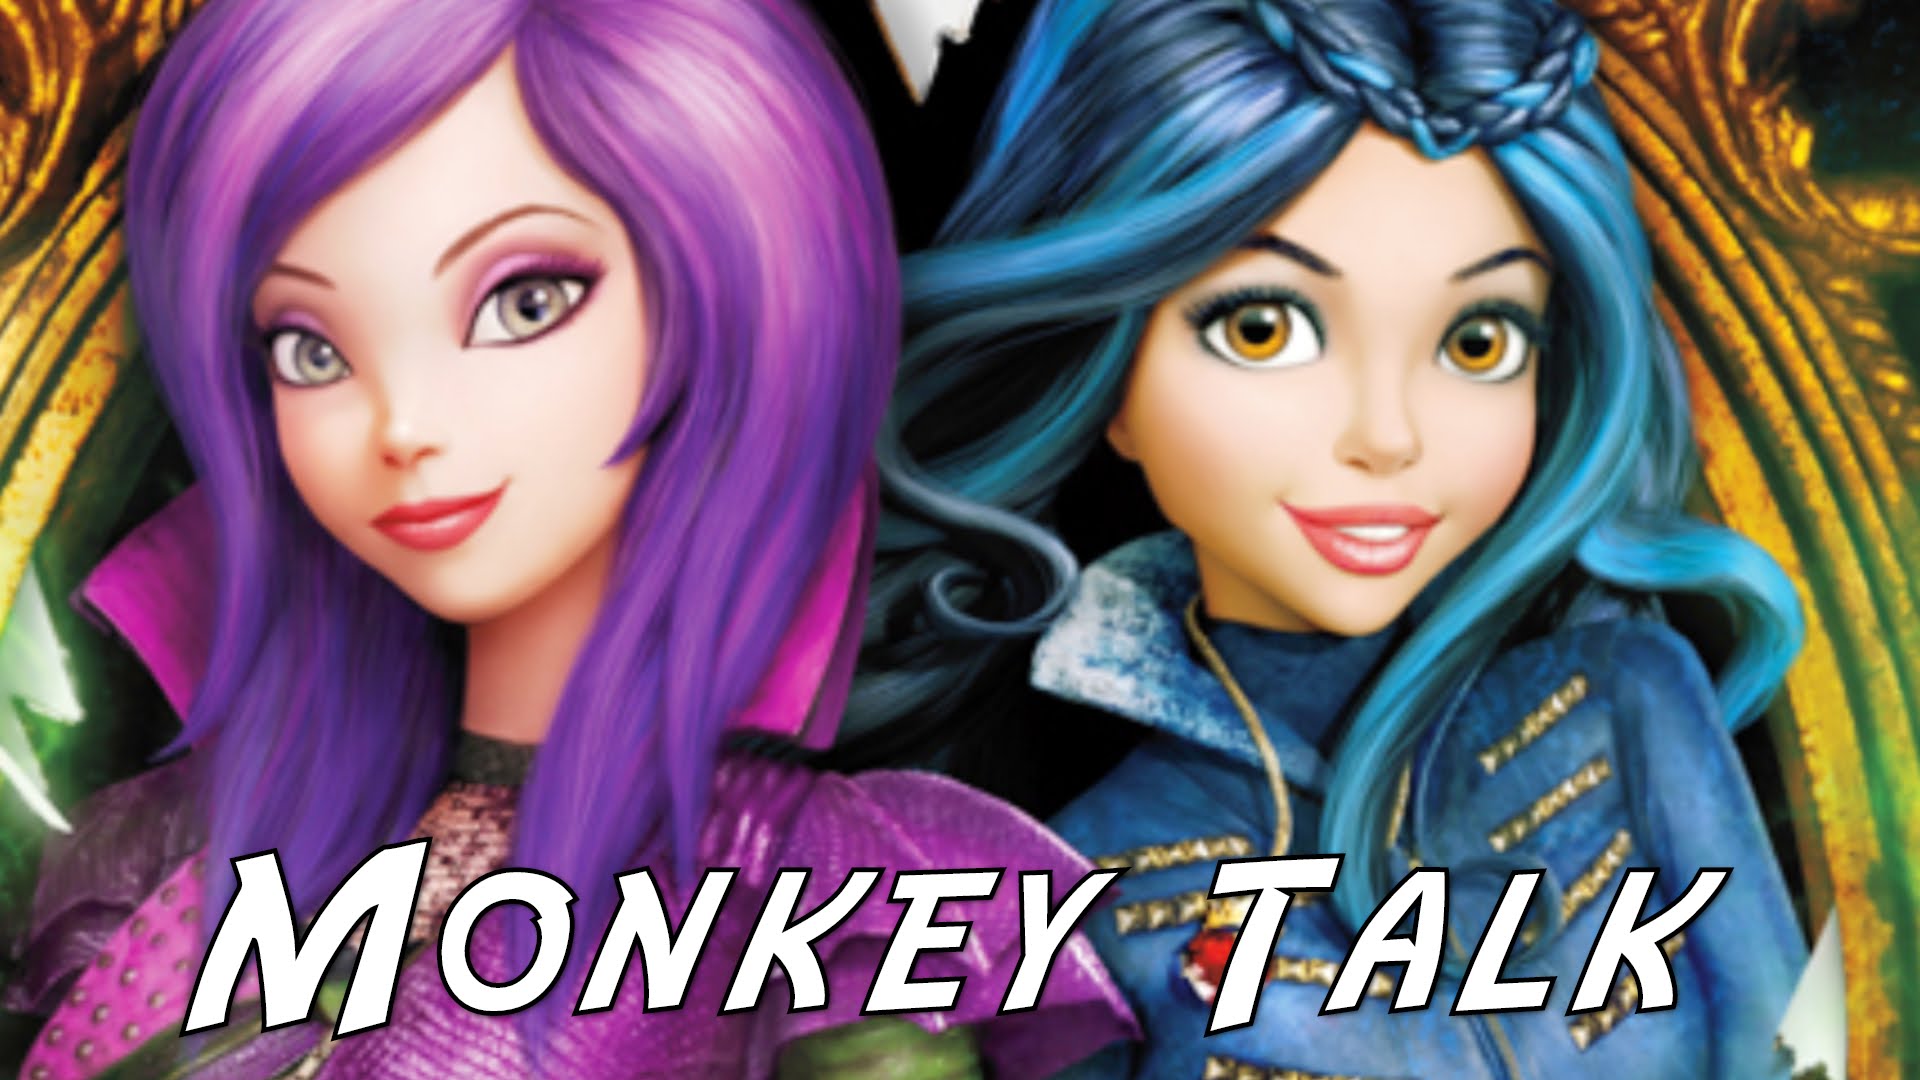 What I Think Of Descendants Wicked World Monkey Talk - YouTube